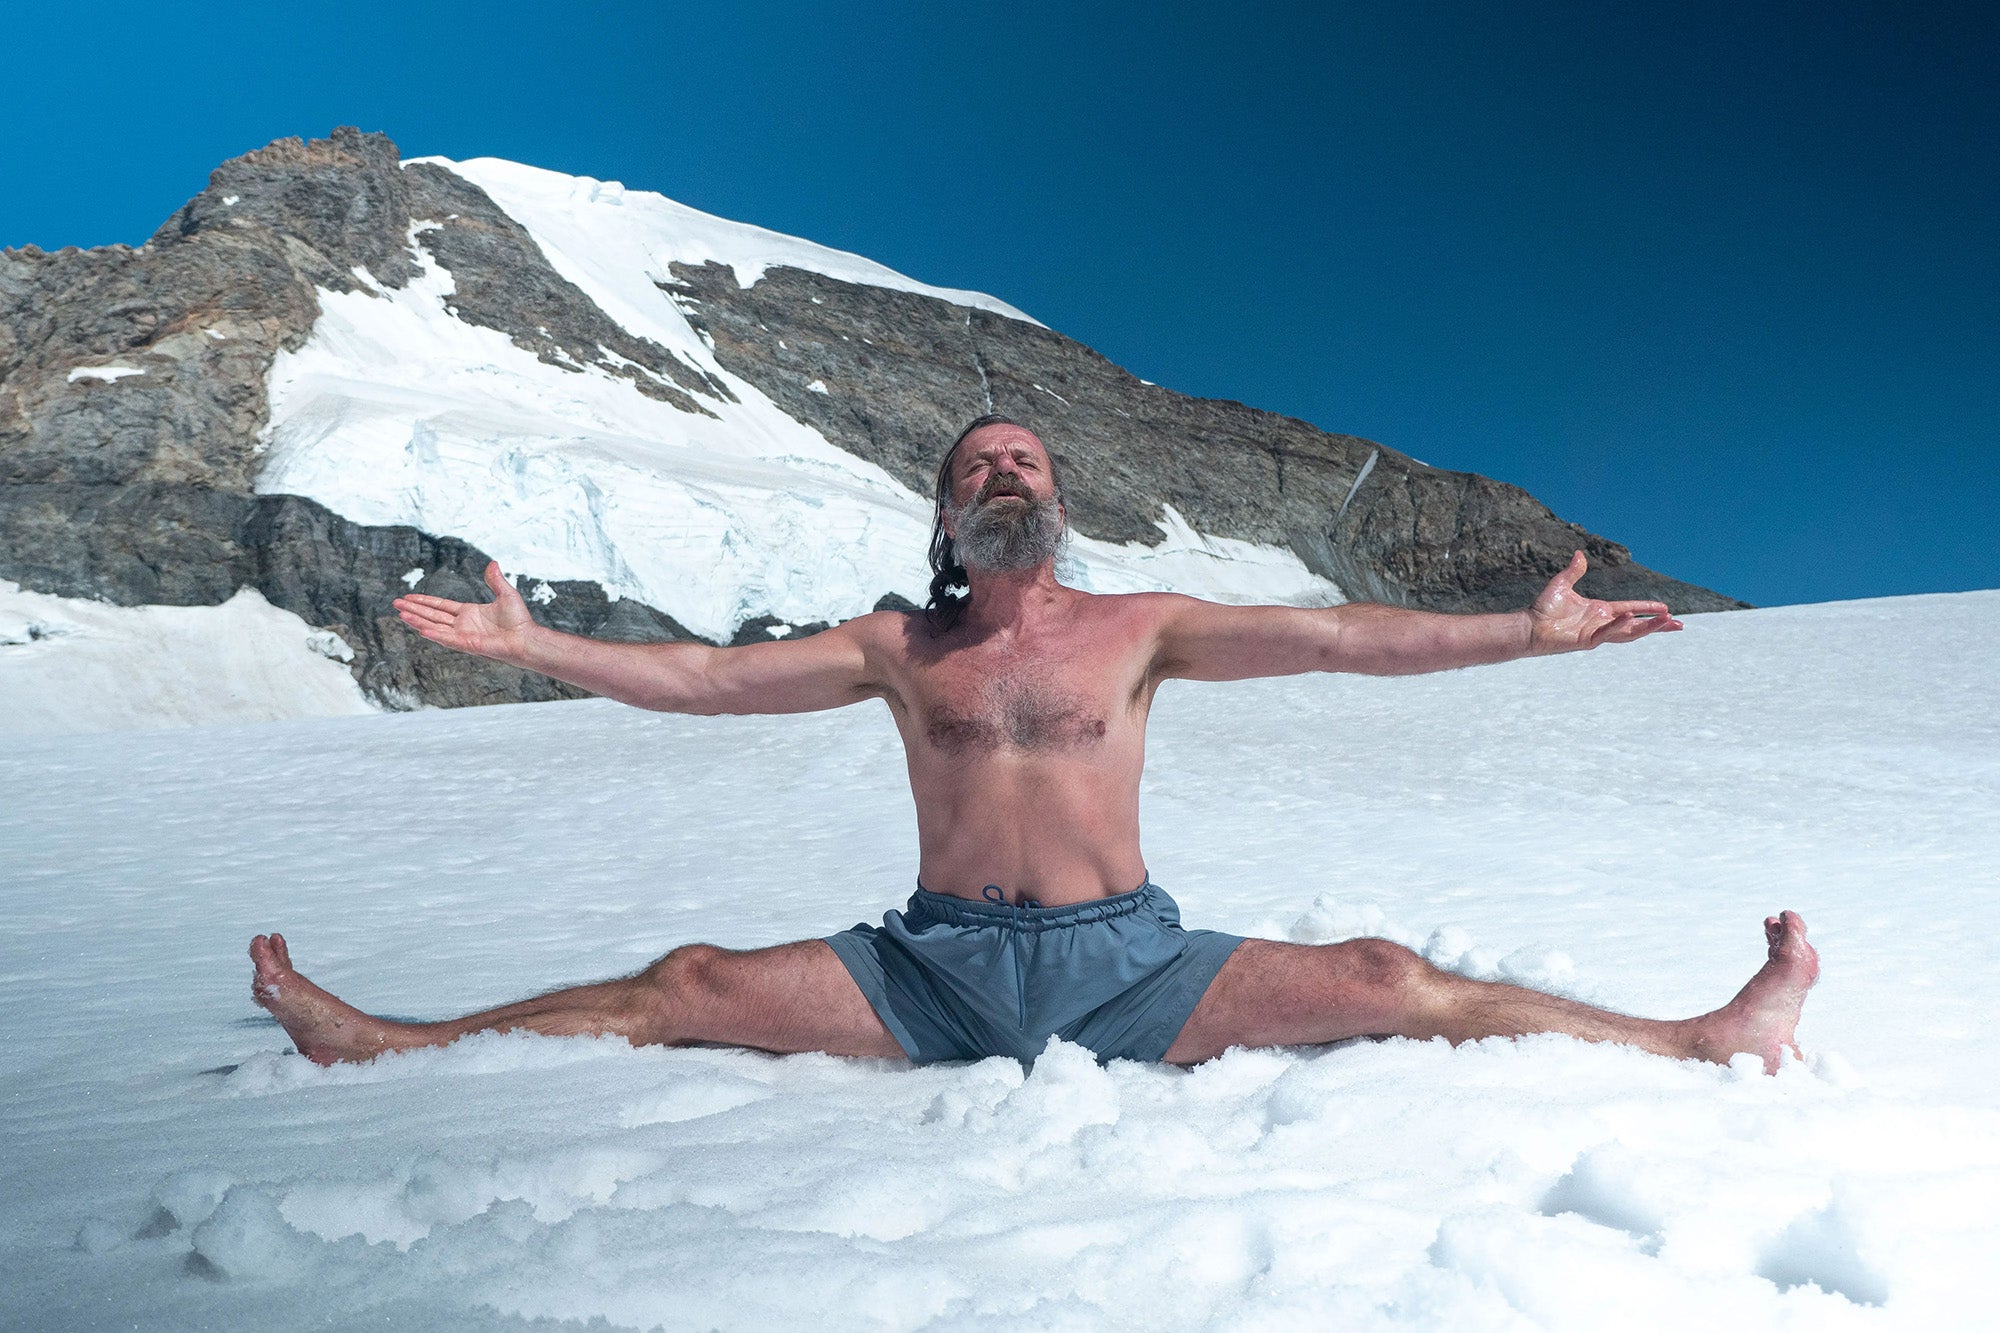 Wim hof method and Mental benefits of ice baths